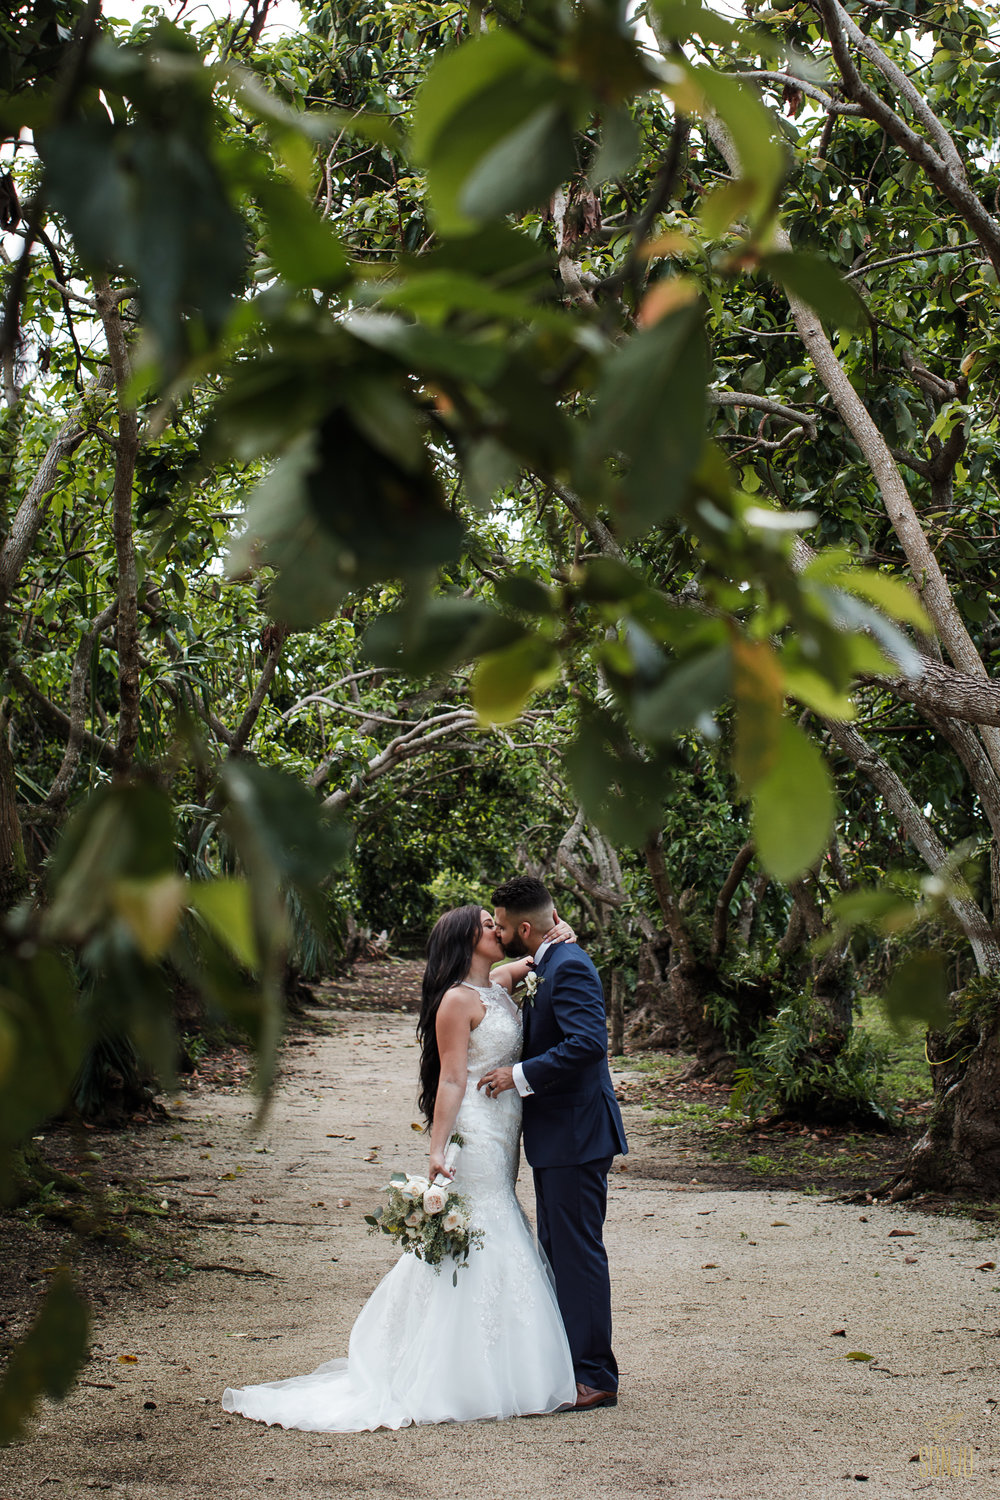 South Florida Wedding Photographer - The Old Grove